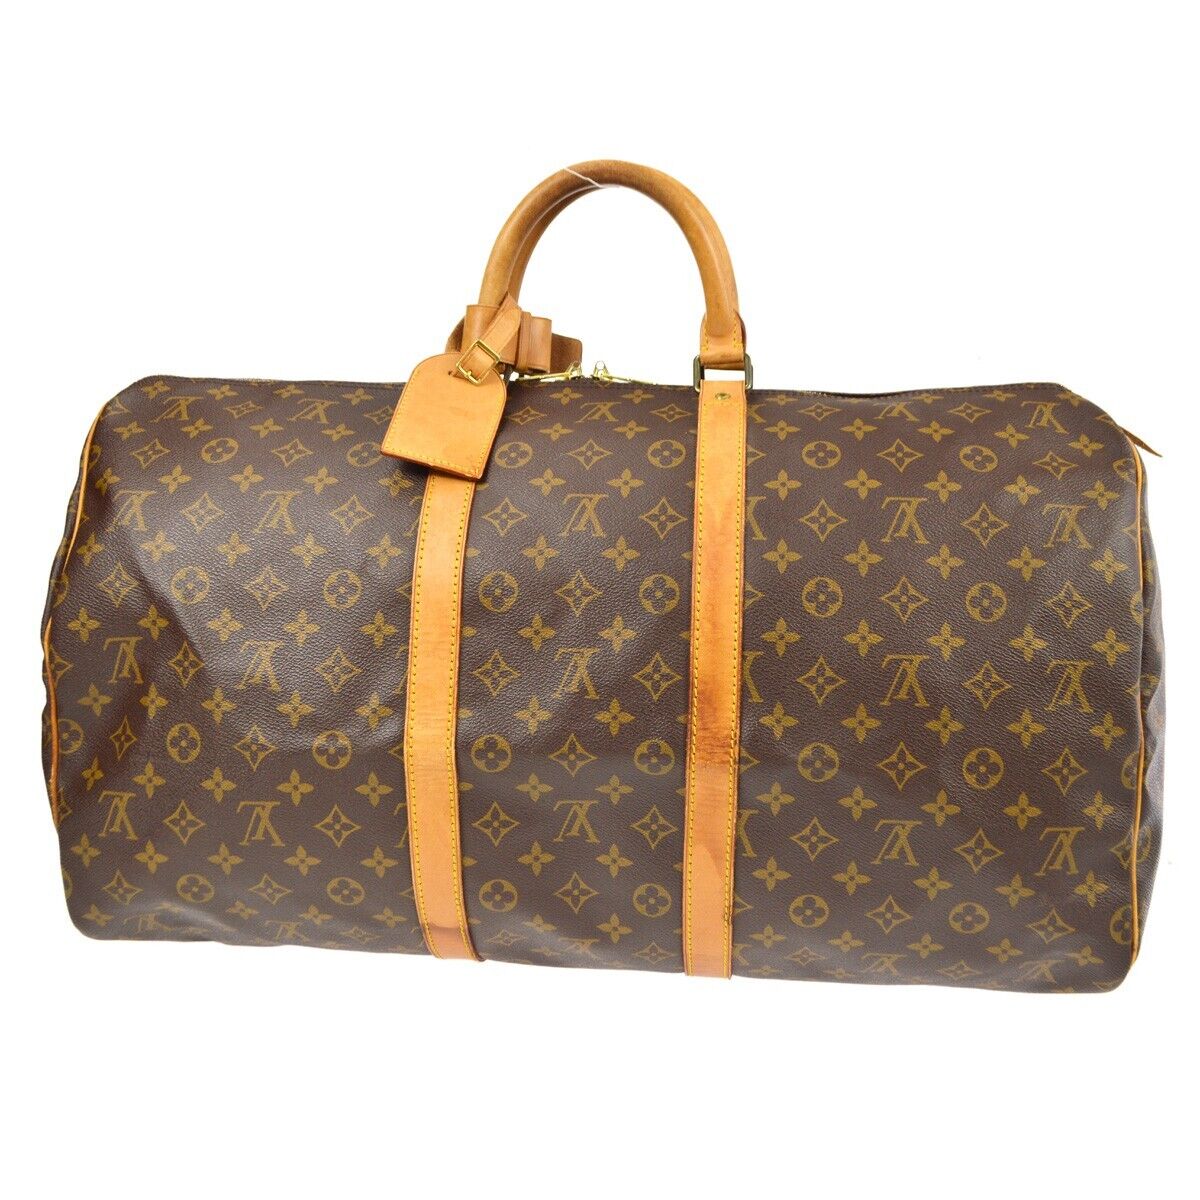 Louis VUITTON Travel bag Keepall model in monogram canv…